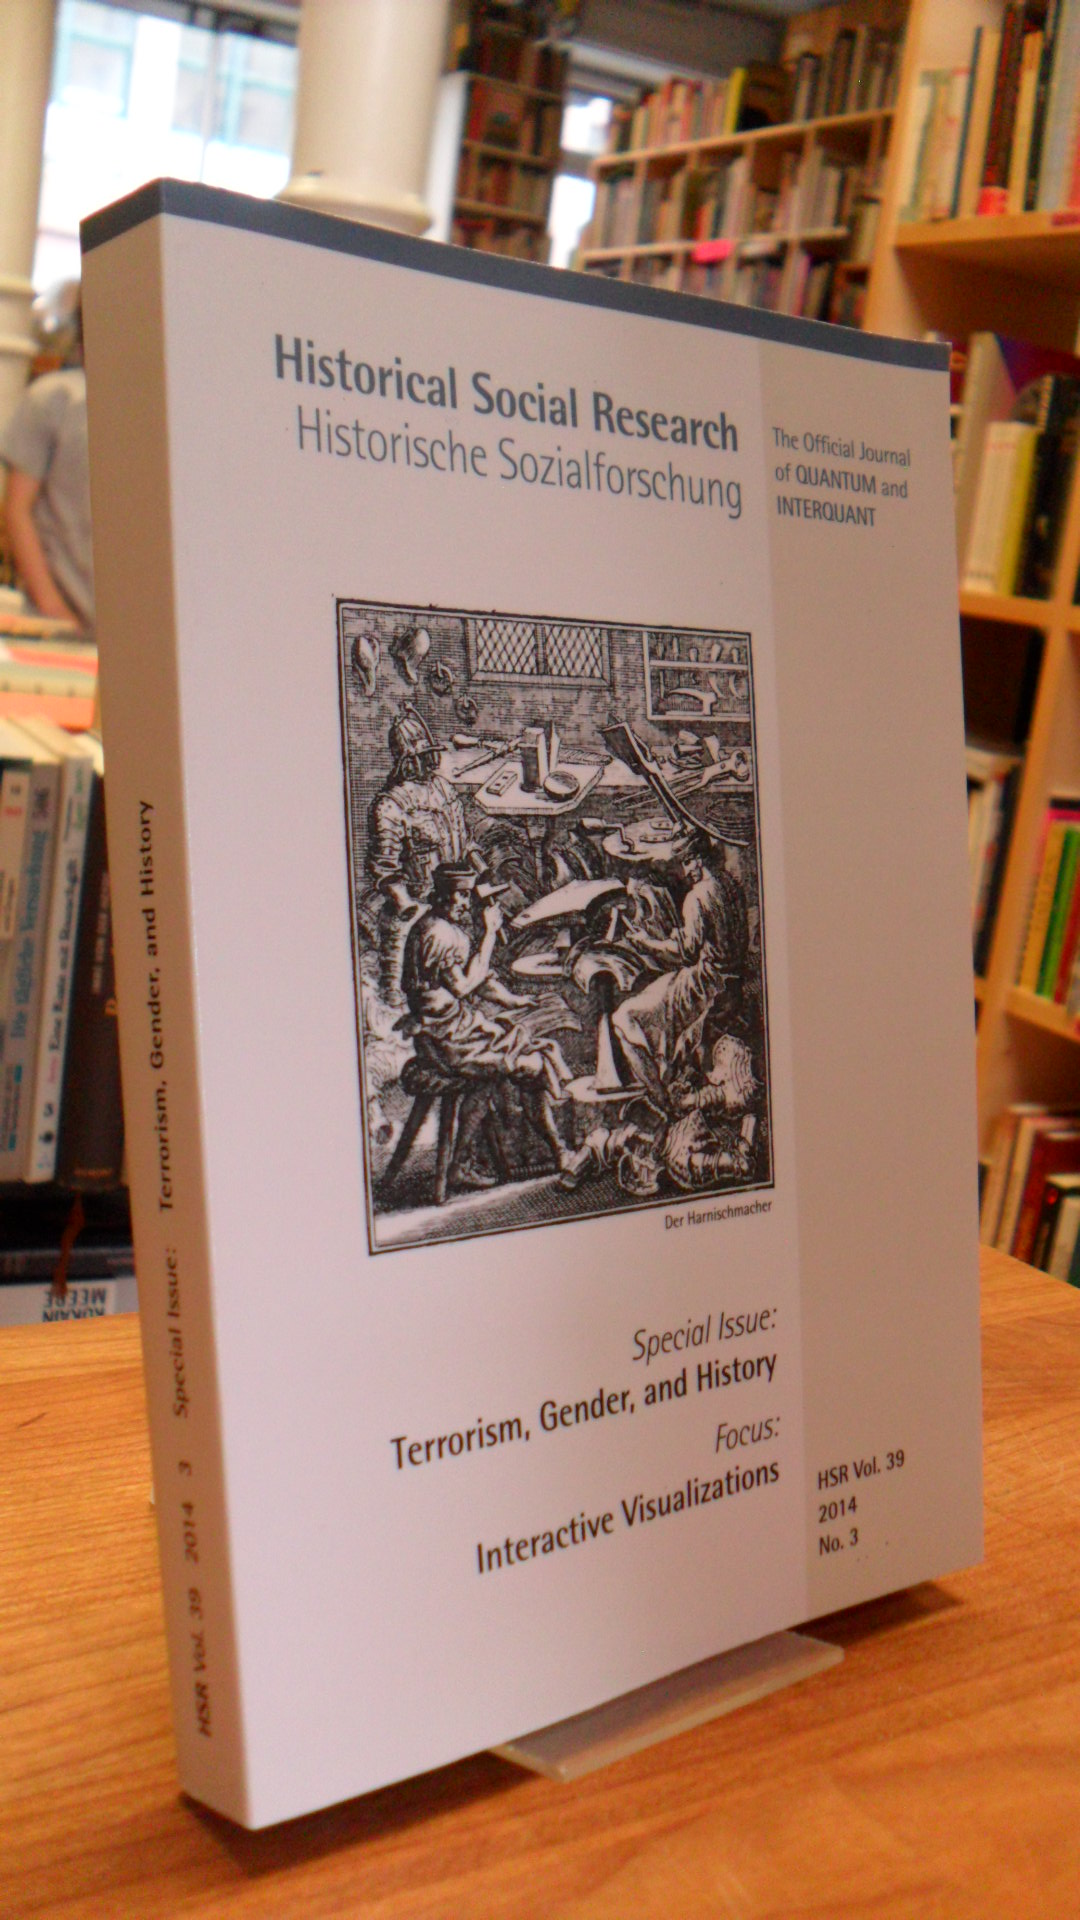 Historical Social Research – Historische Sozialforschung – The Official Journal